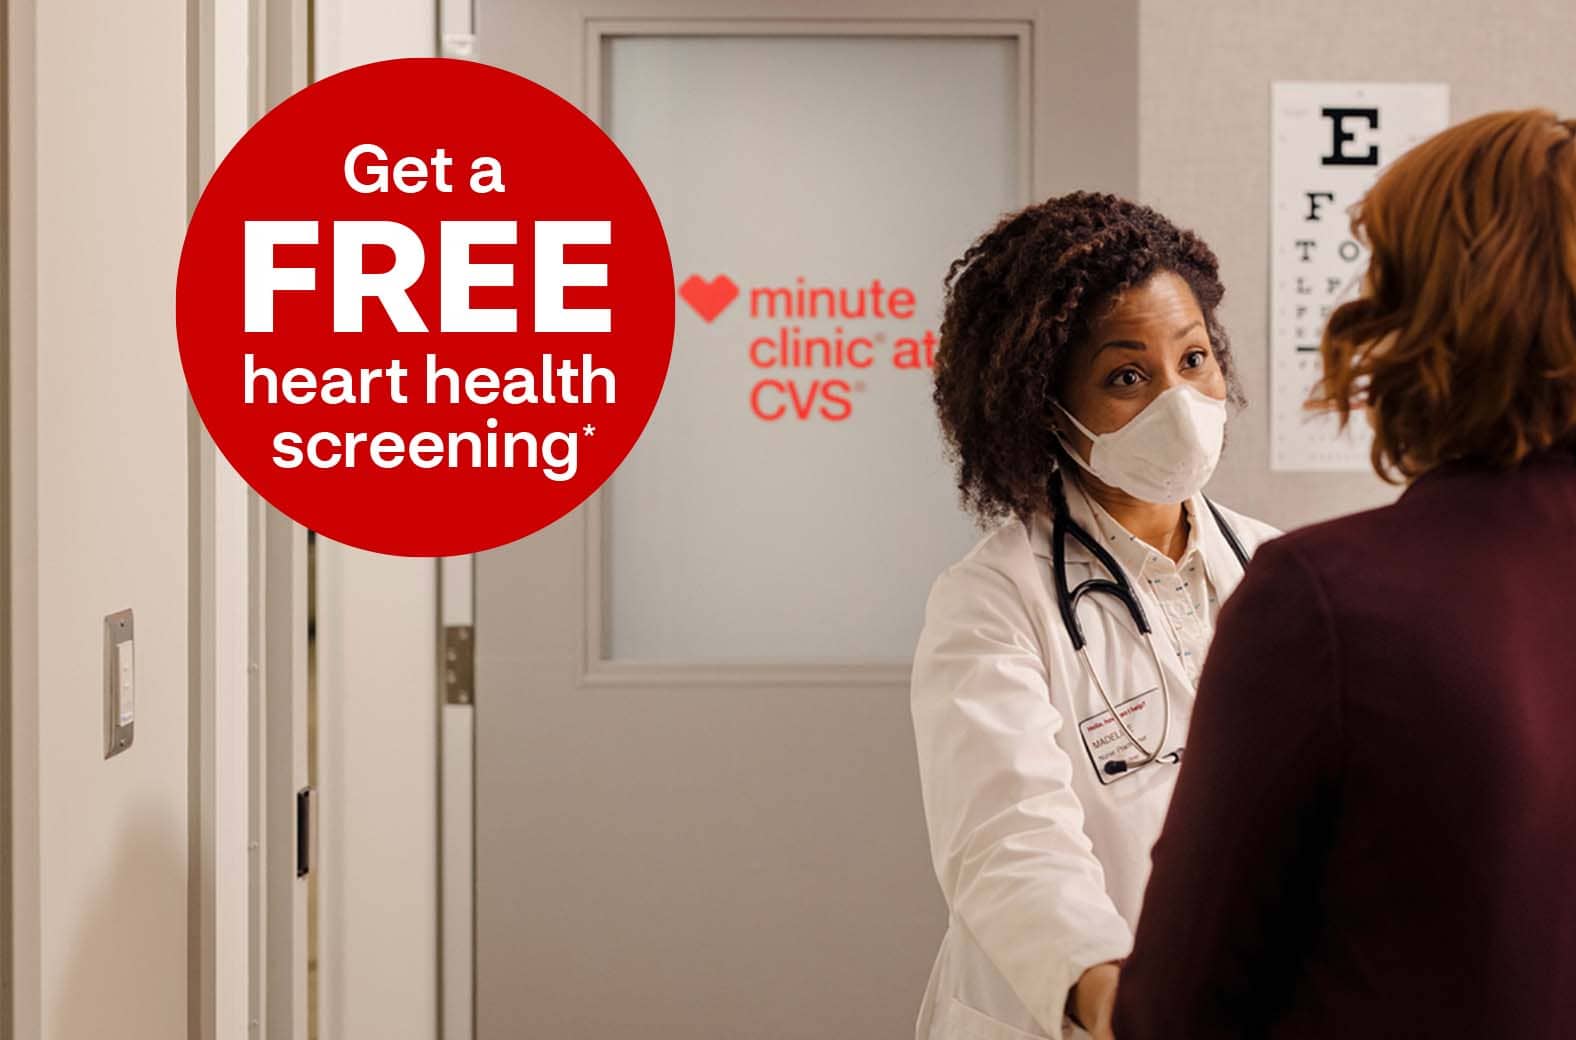 Get a FREE heart health screening, MinuteClinic at CVS